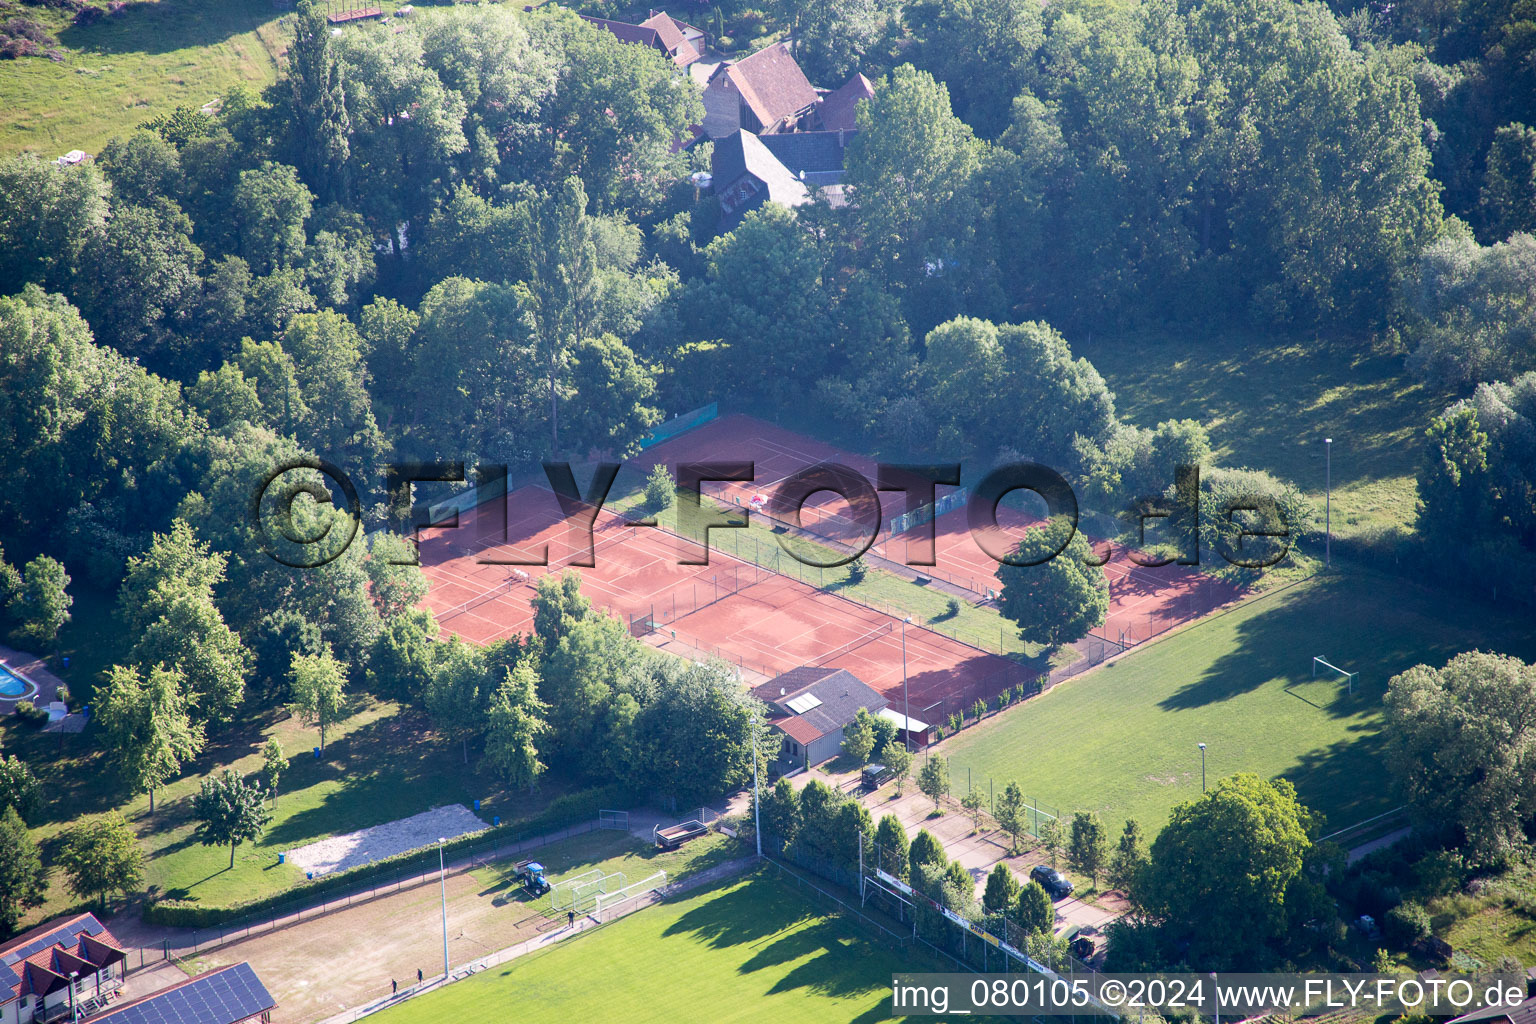 Aerial view of Sports fields in the district Ingenheim in Billigheim-Ingenheim in the state Rhineland-Palatinate, Germany